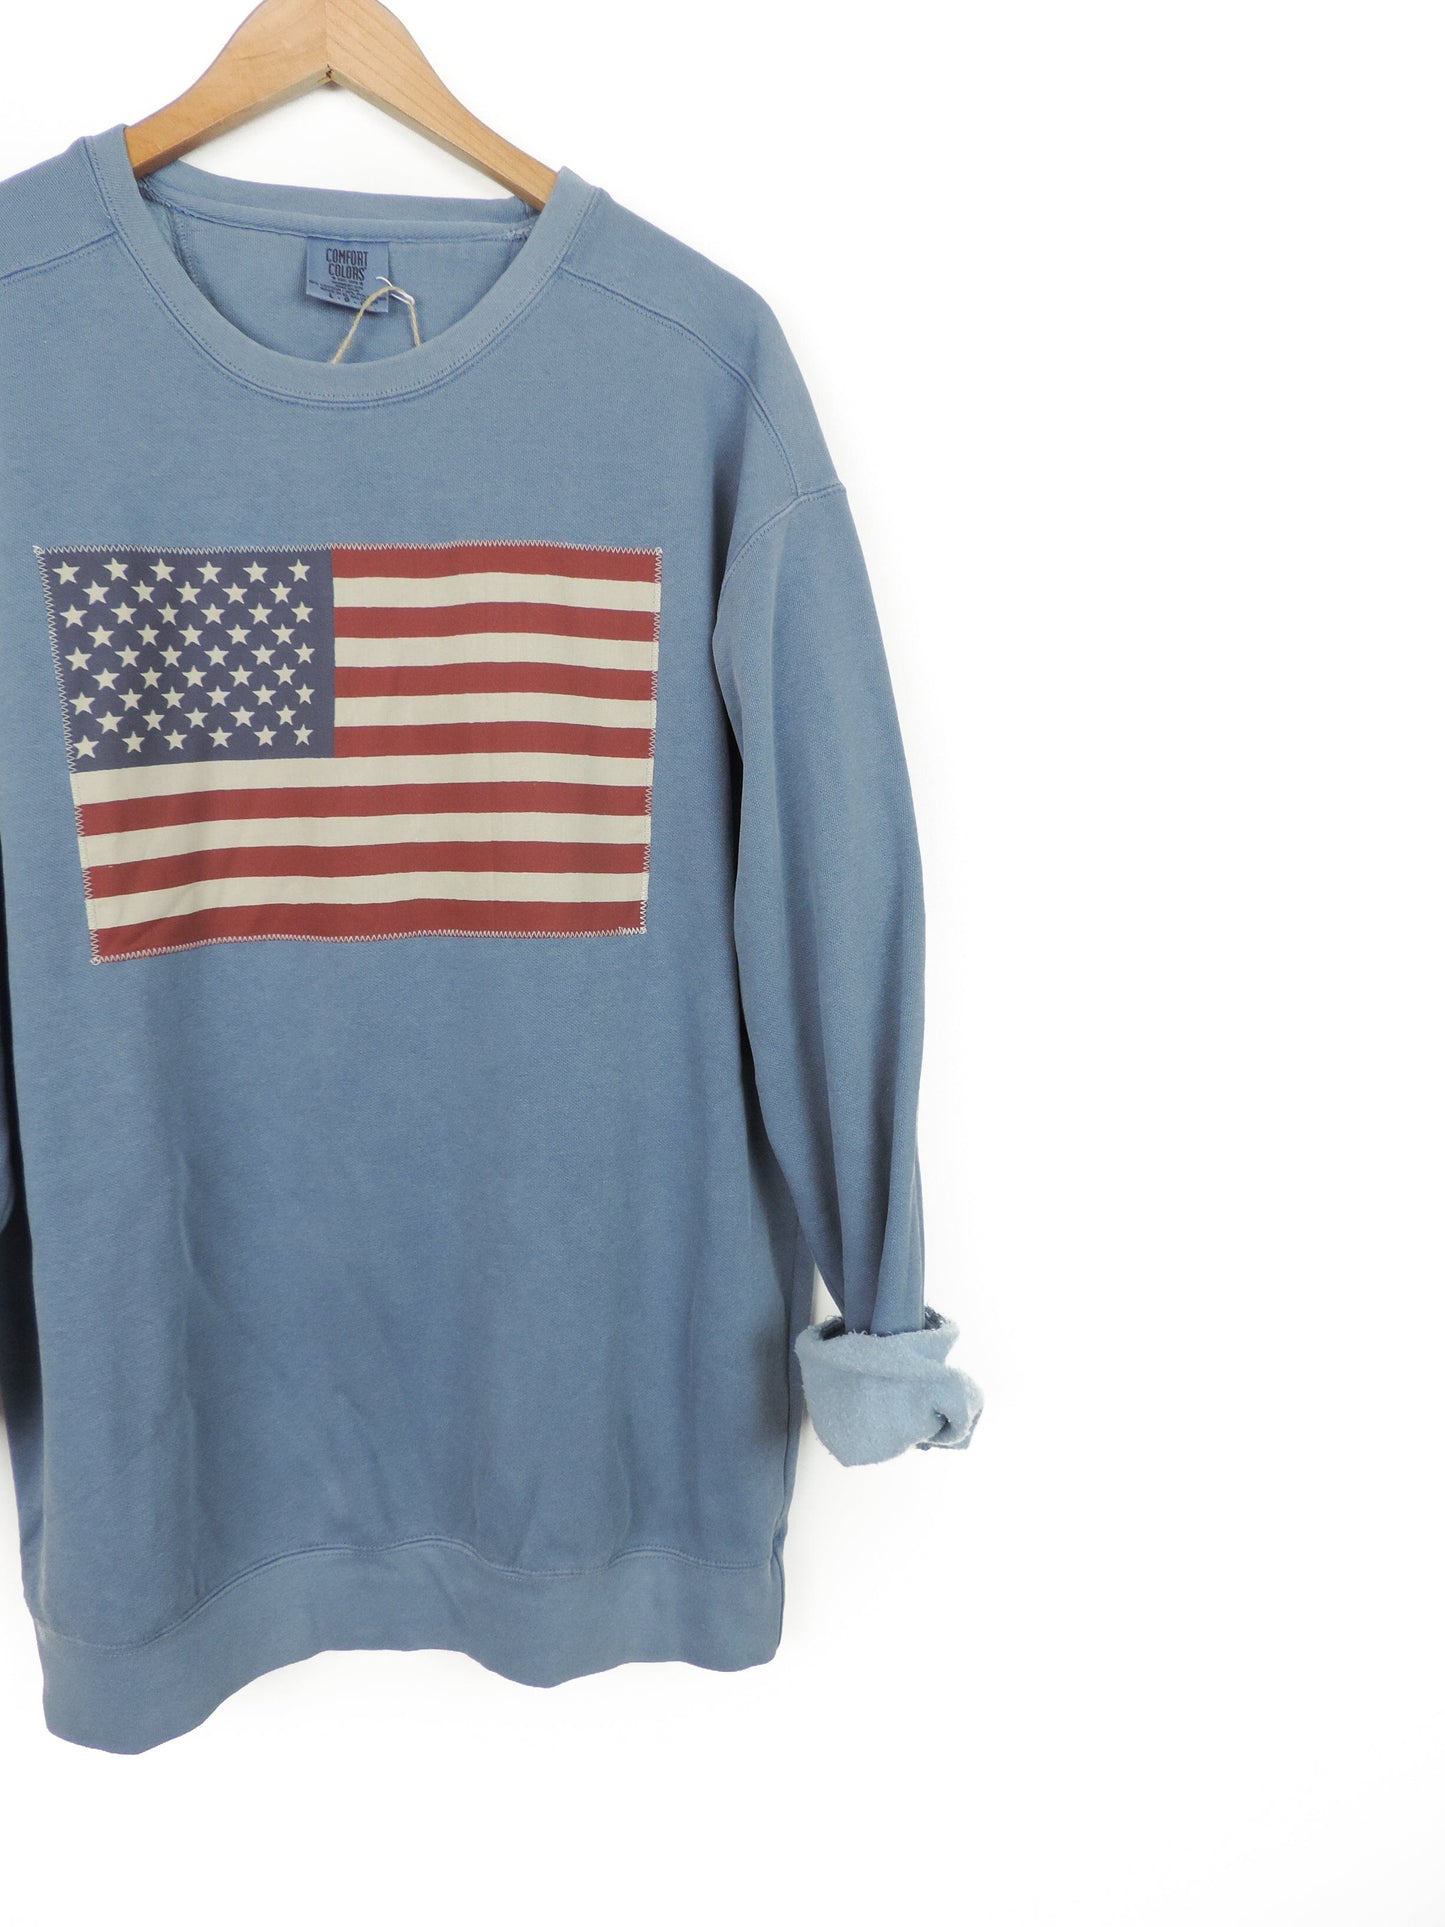 Stitched American Flag Sweatshirt